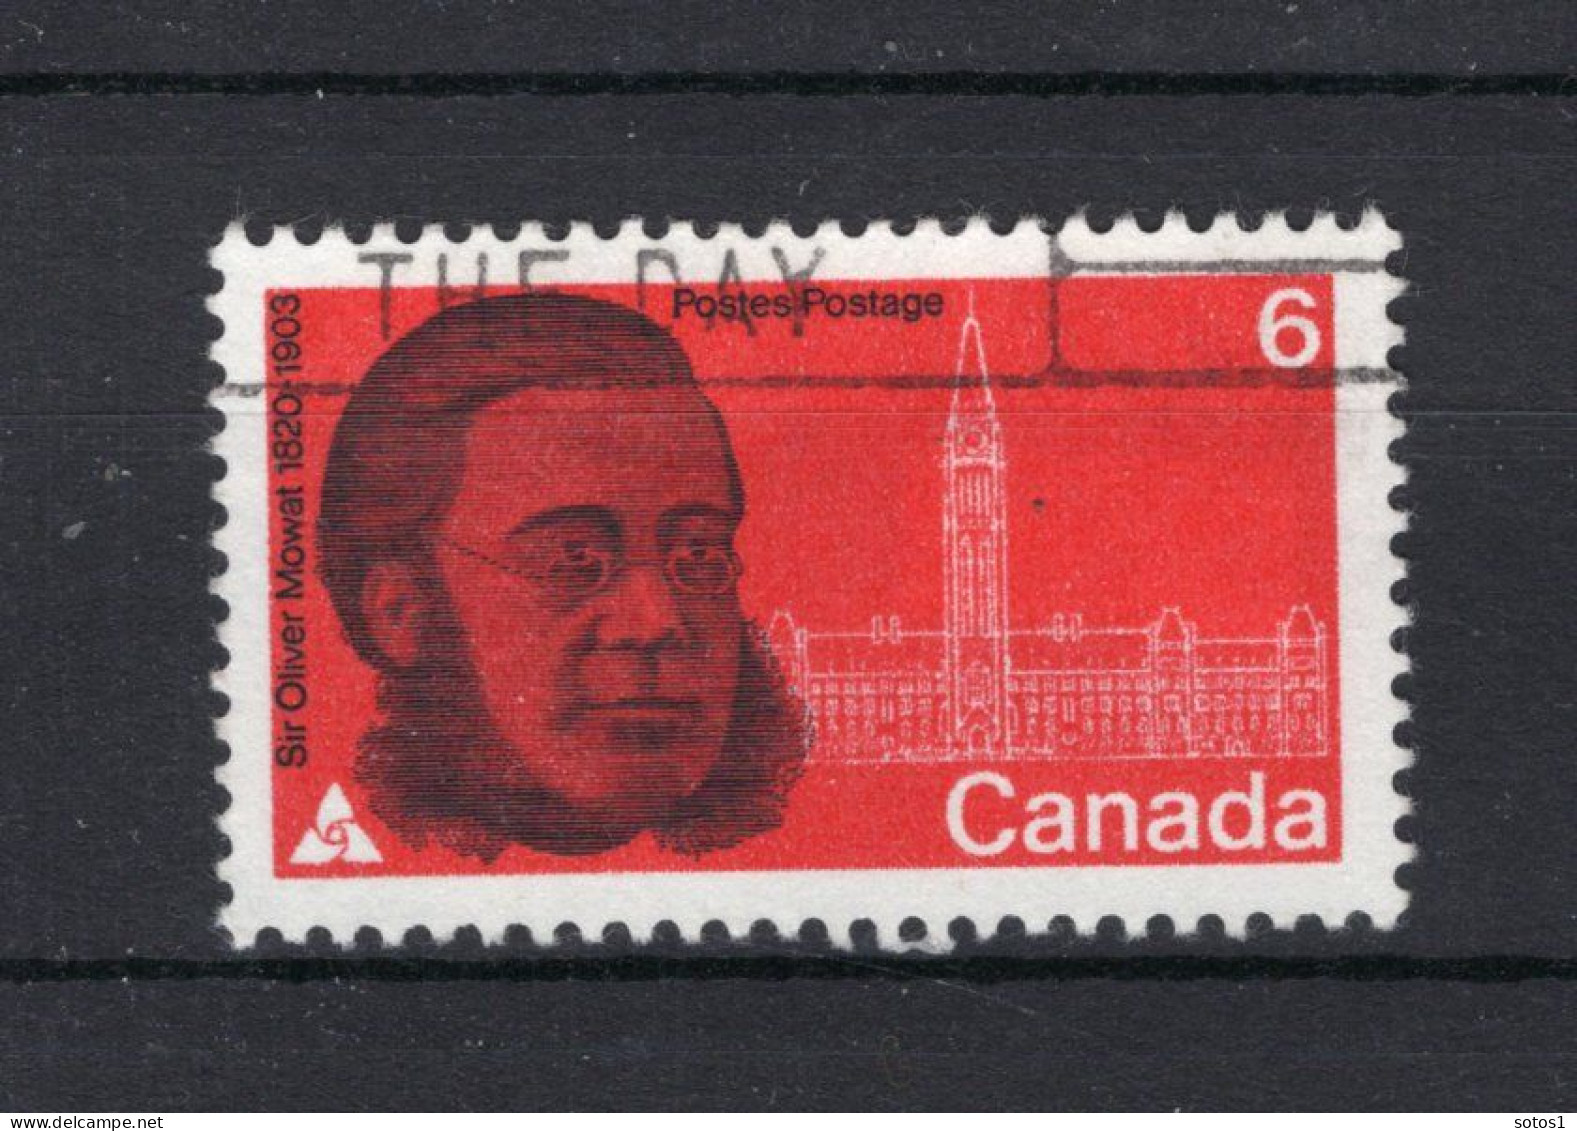 CANADA Yt. 438° Gestempeld 1970 - Gebraucht